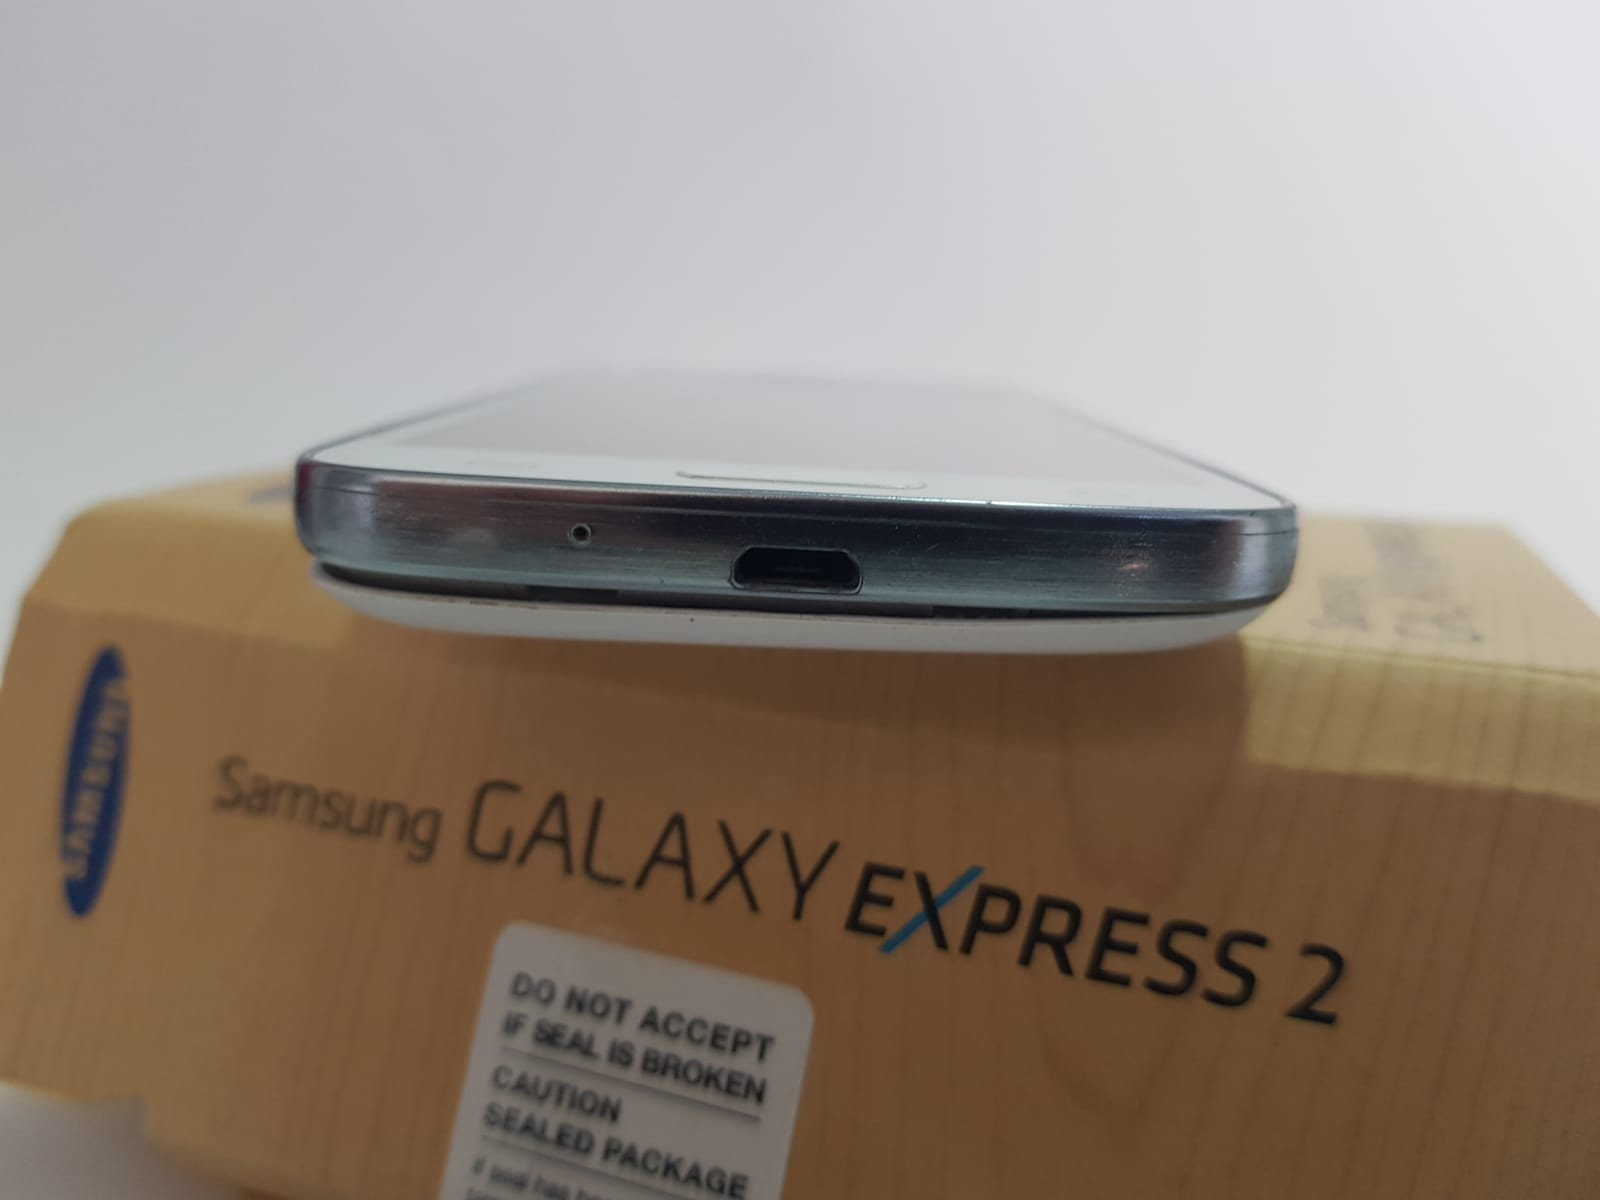 Samsung Galaxy Express 2 #2